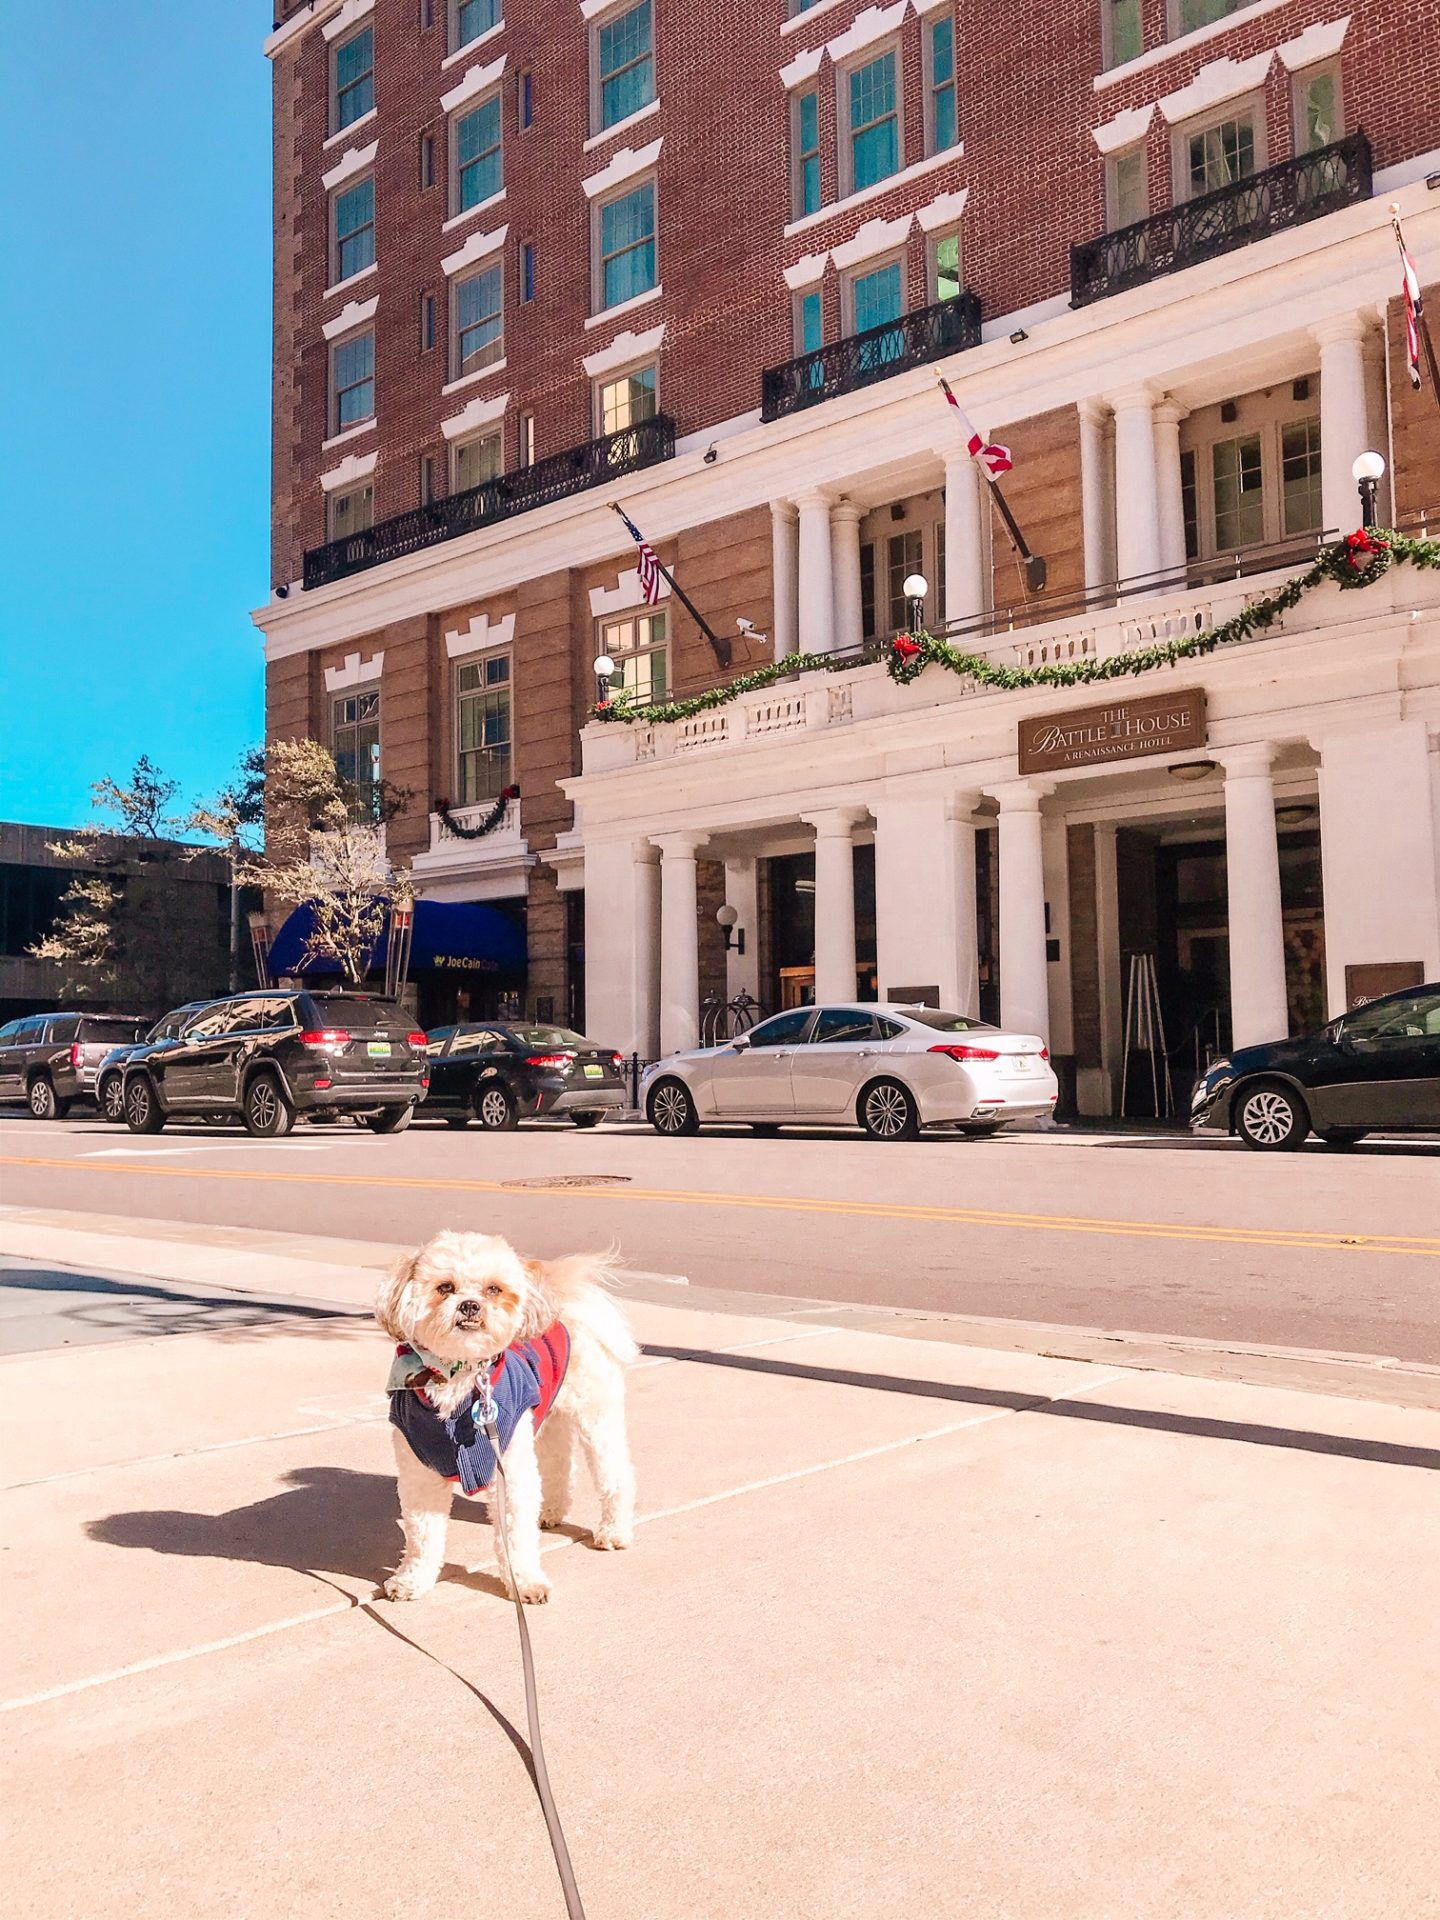 Dog Friendly Travel: The Battlehouse Hotel in Mobile, Alabama